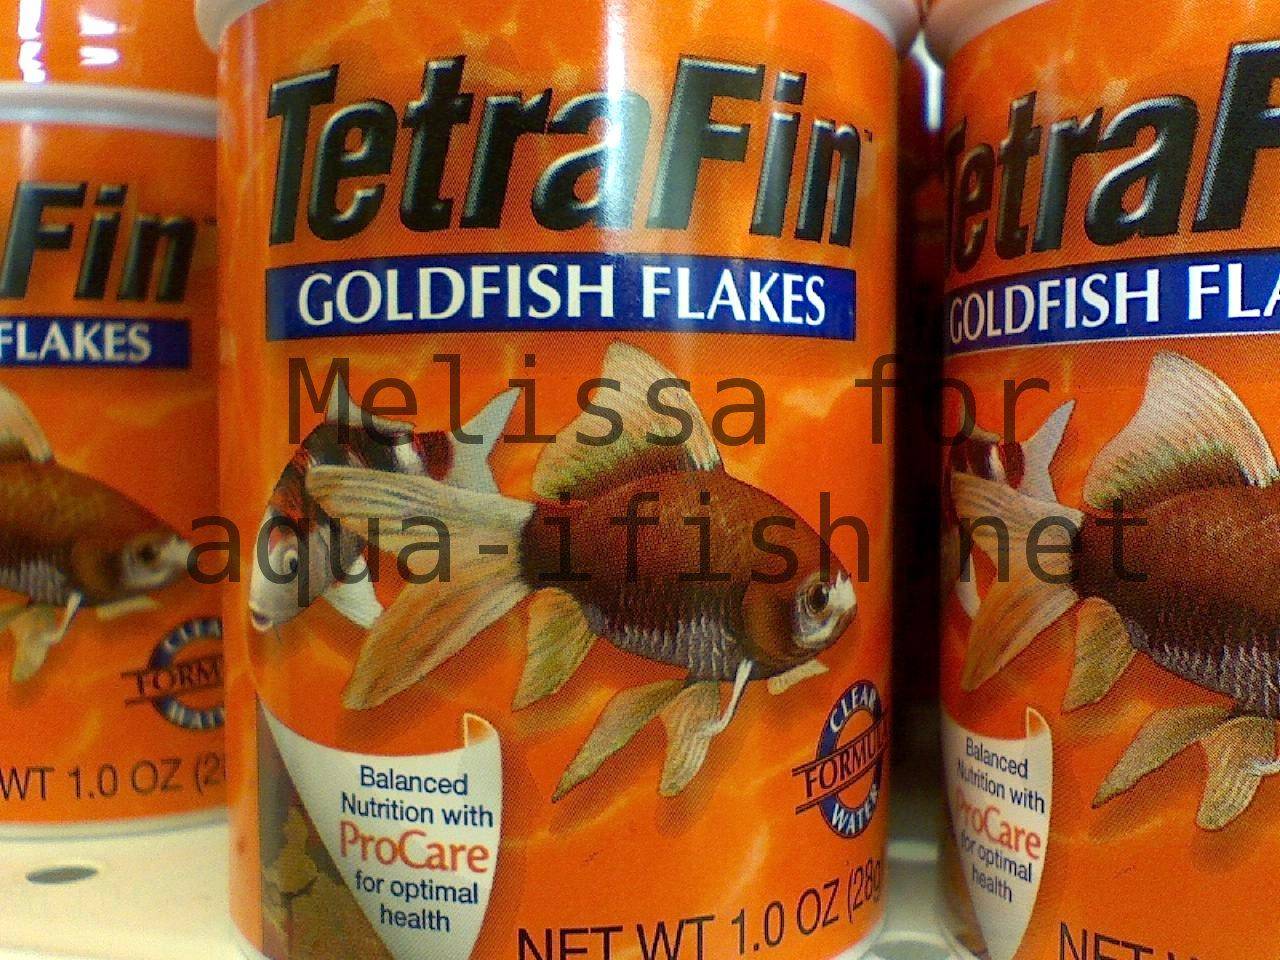 Reptomin Sticks Fish Food Review